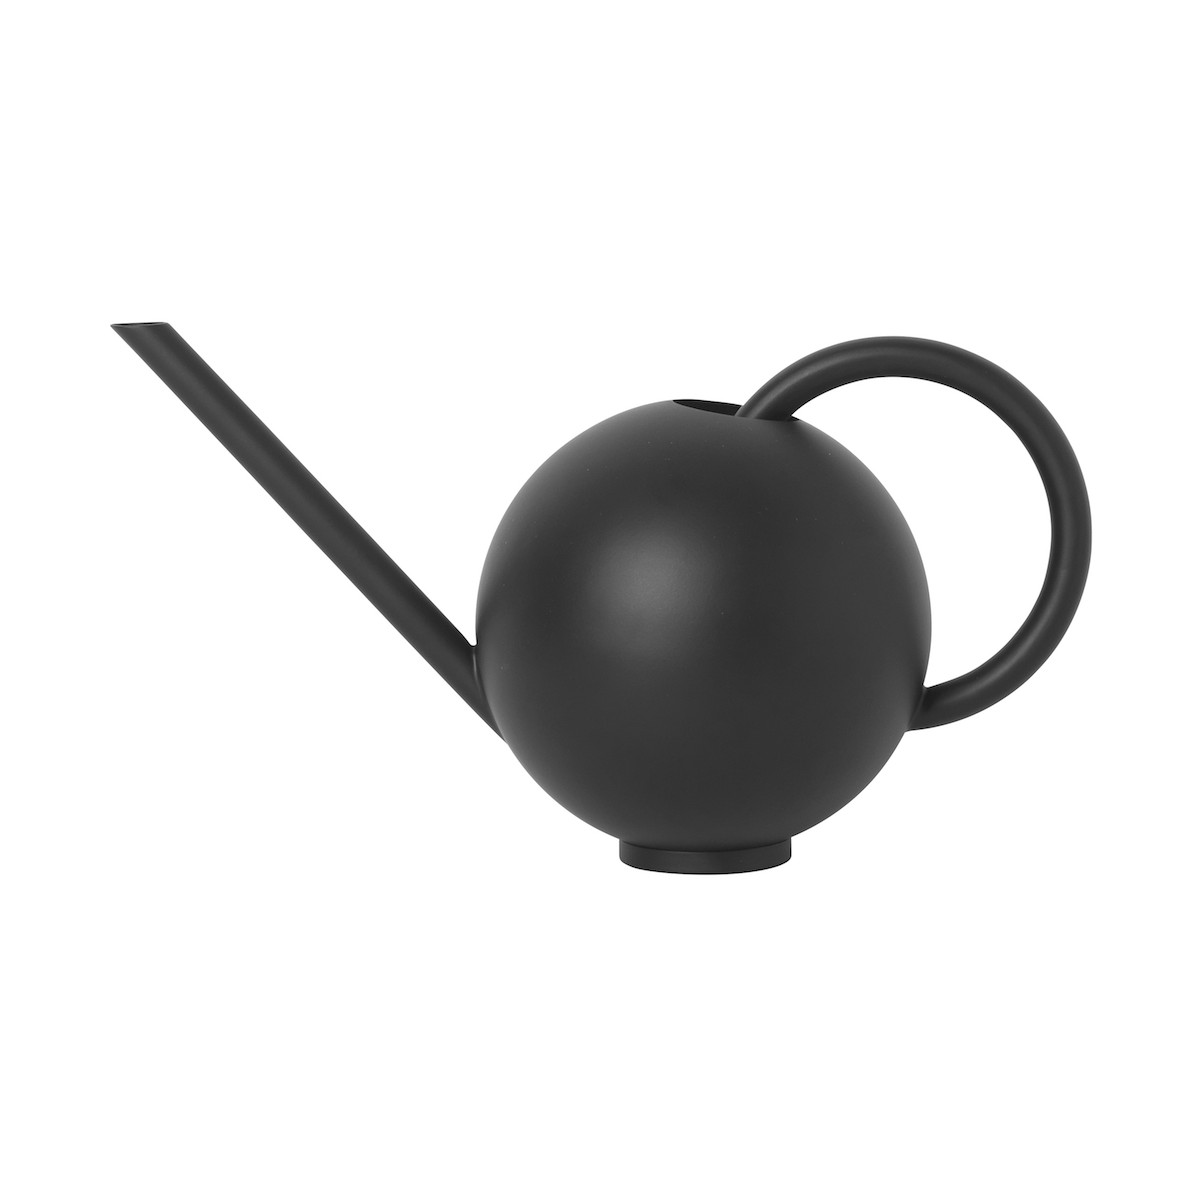 Orb watering can - black